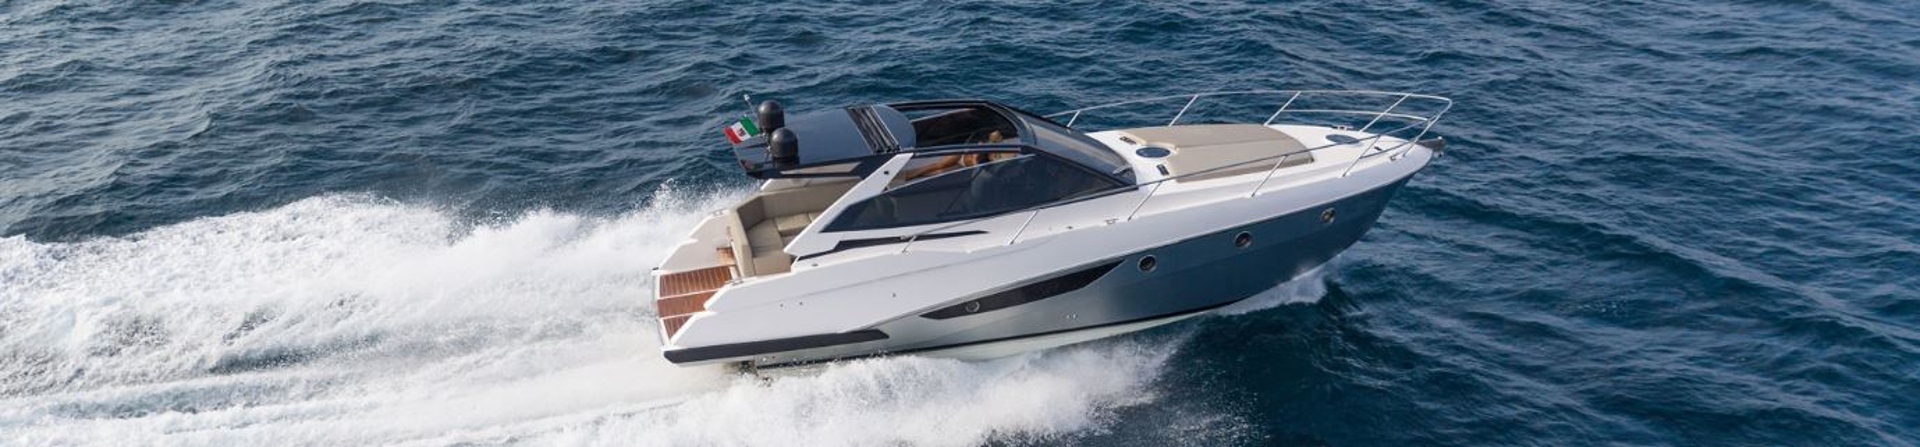 Motor yachts charter in Croatia